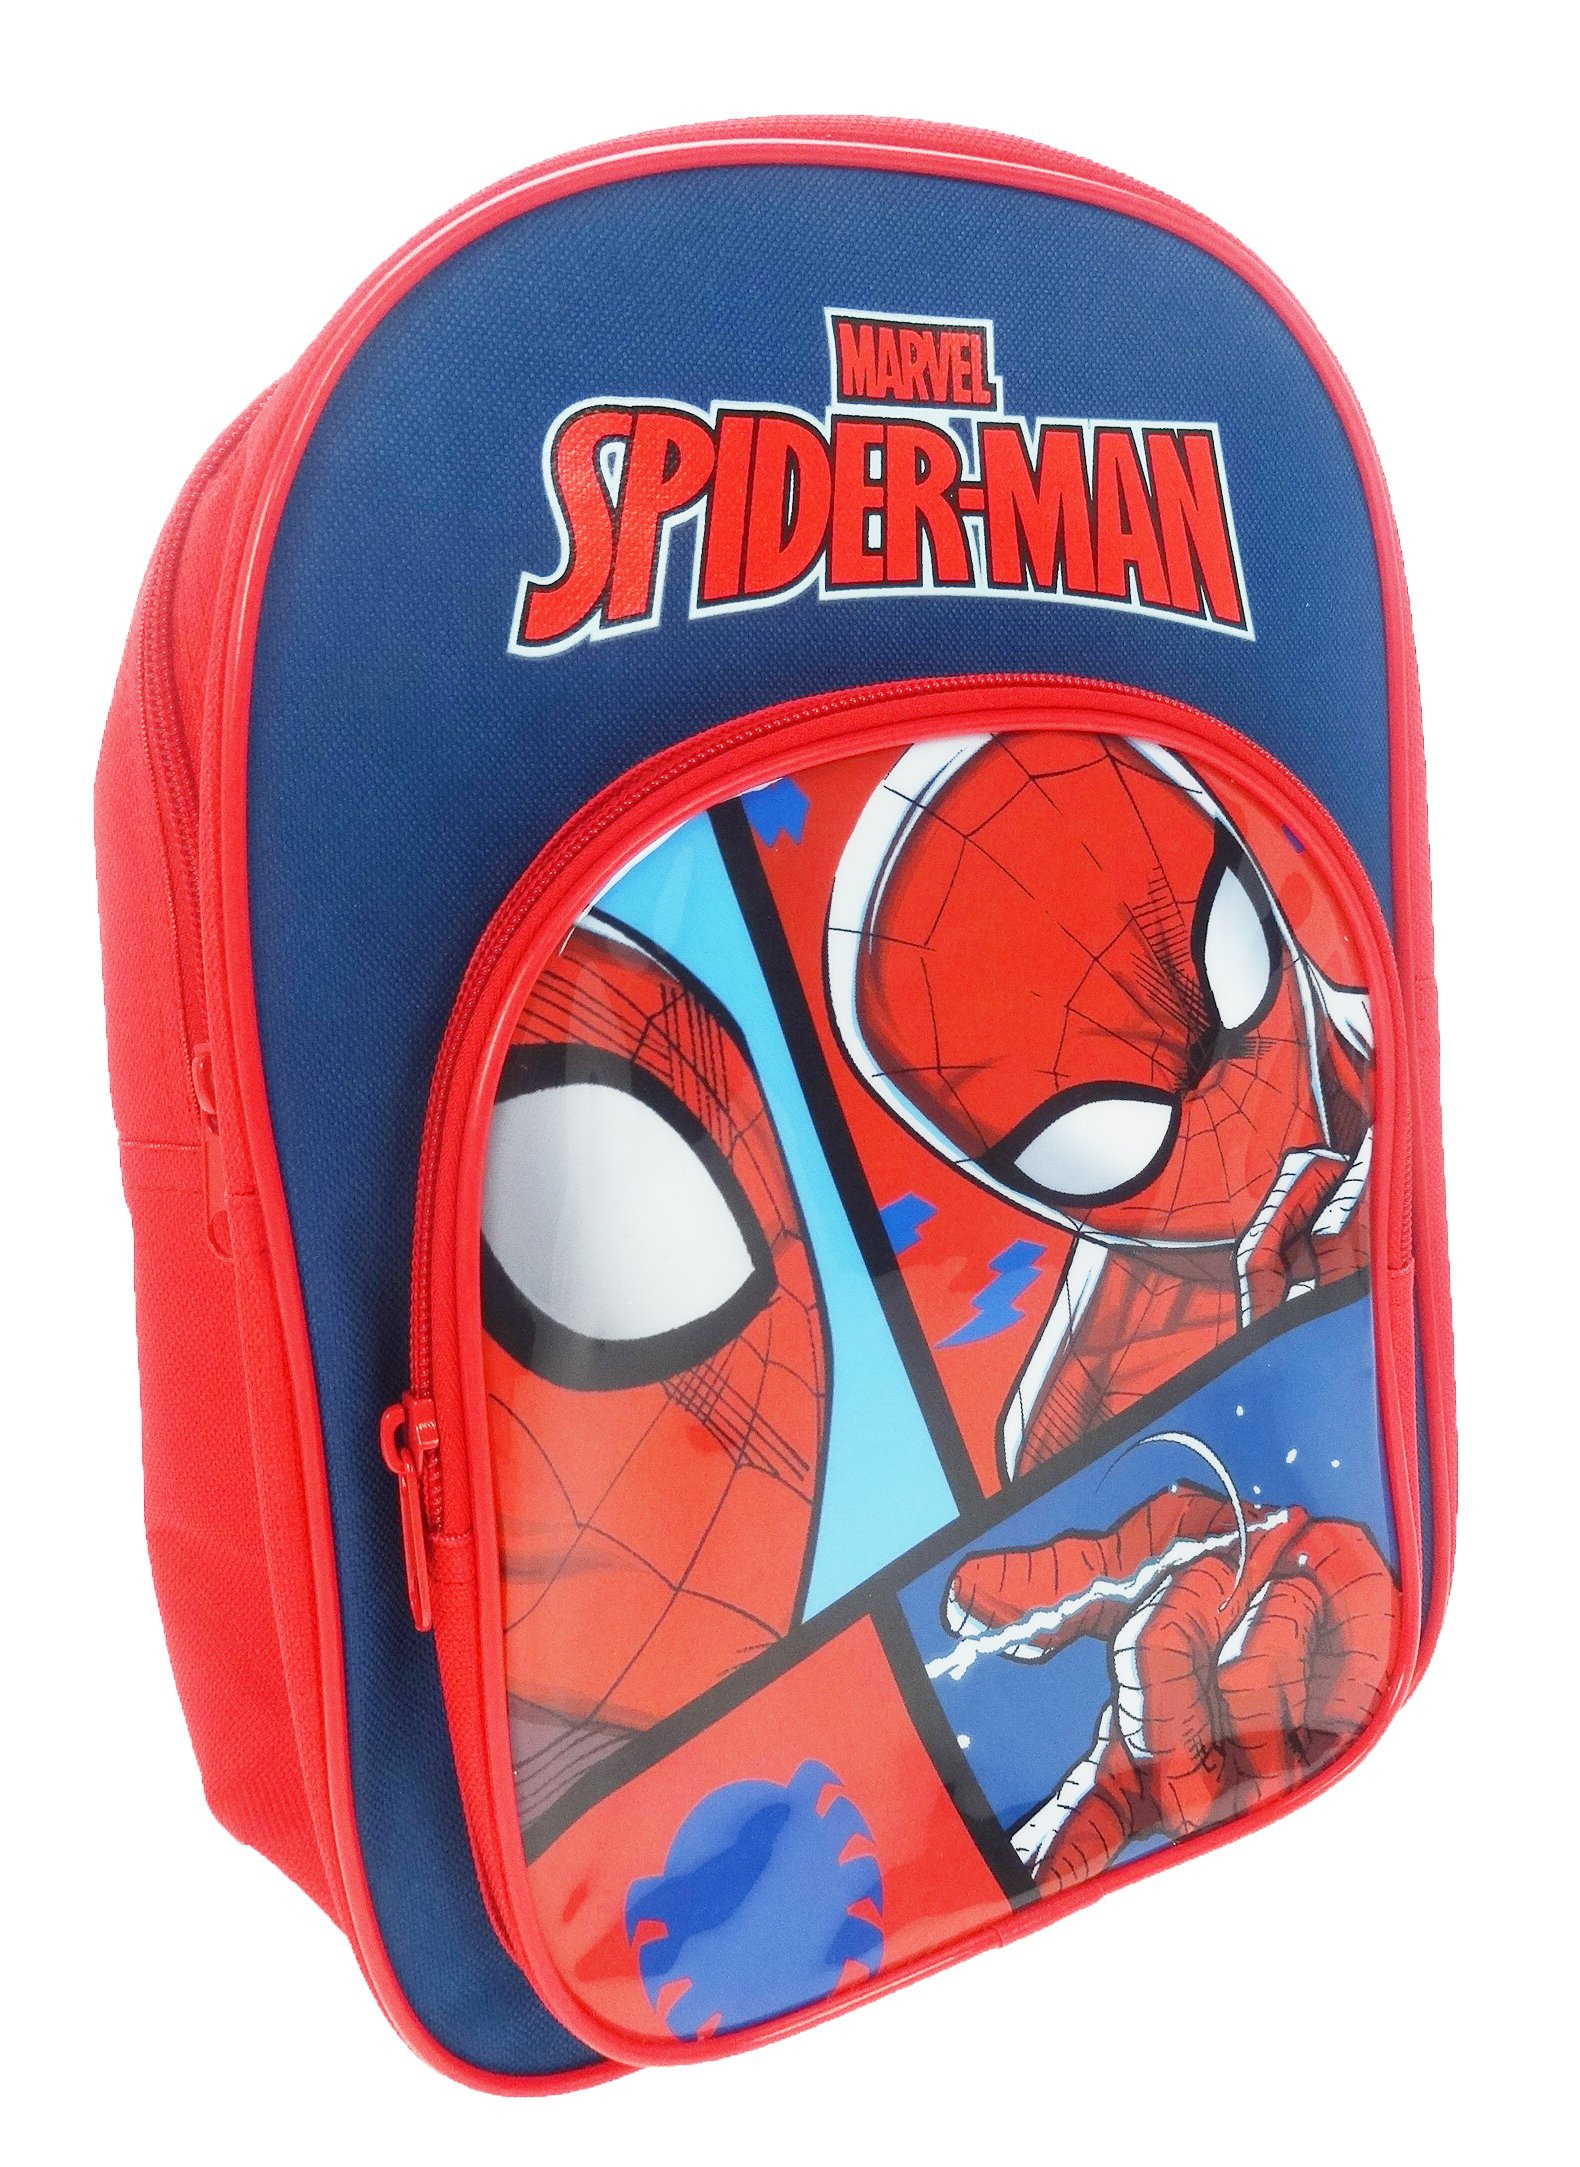 Spiderman 'Abstract' Arch Pocket School Bag Rucksack Backpack